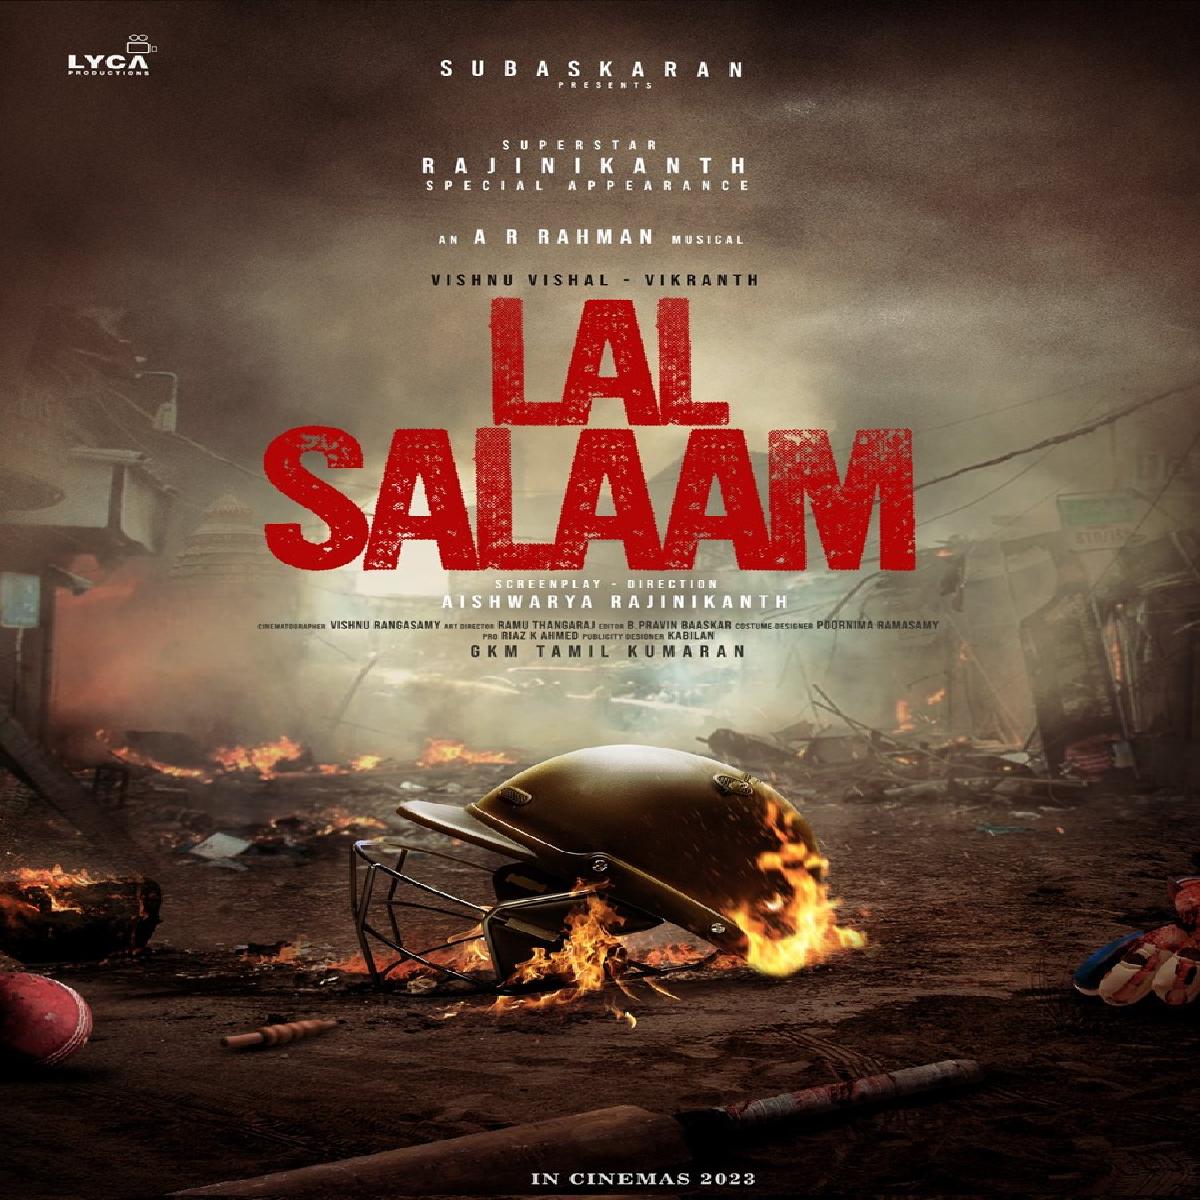 Rajinikanth To Make Cameo In Aishwarya’s Directorial Lal Salaam